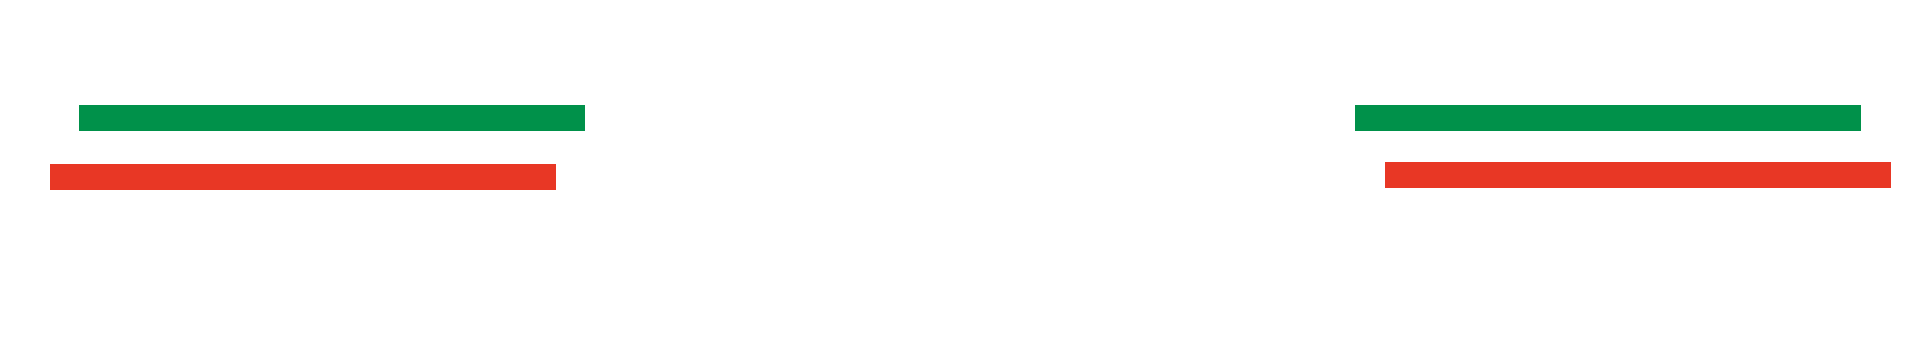 Rondaos Pizzaria & Sports Bar Logo